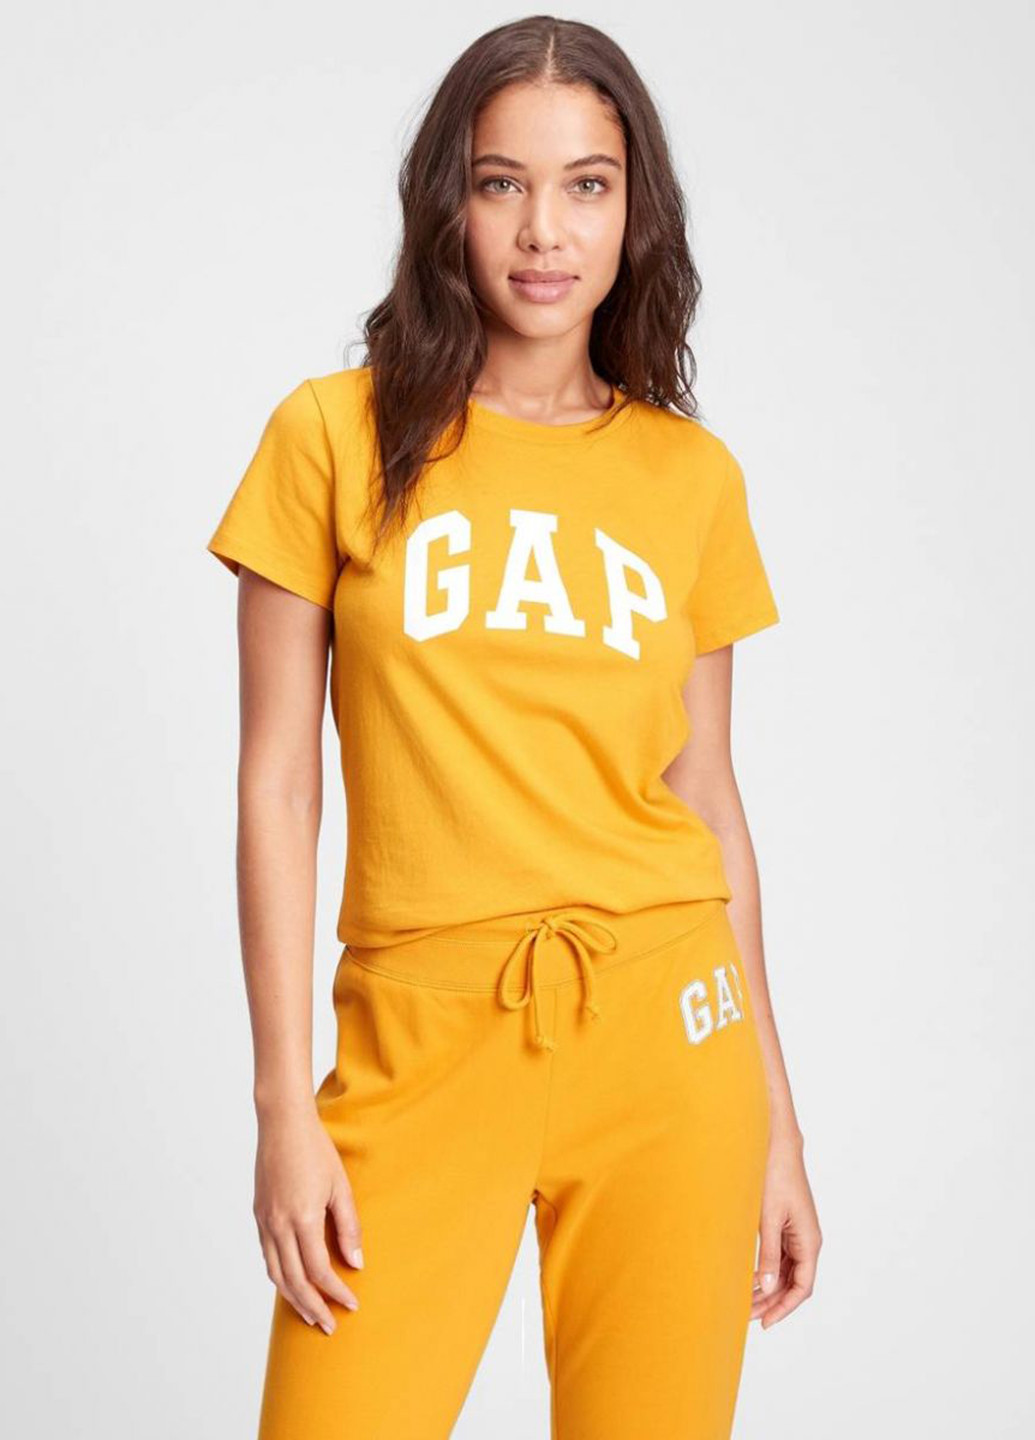 Костюм (футболка, брюки) Gap логотип жёлтый спортивный трикотаж, хлопок